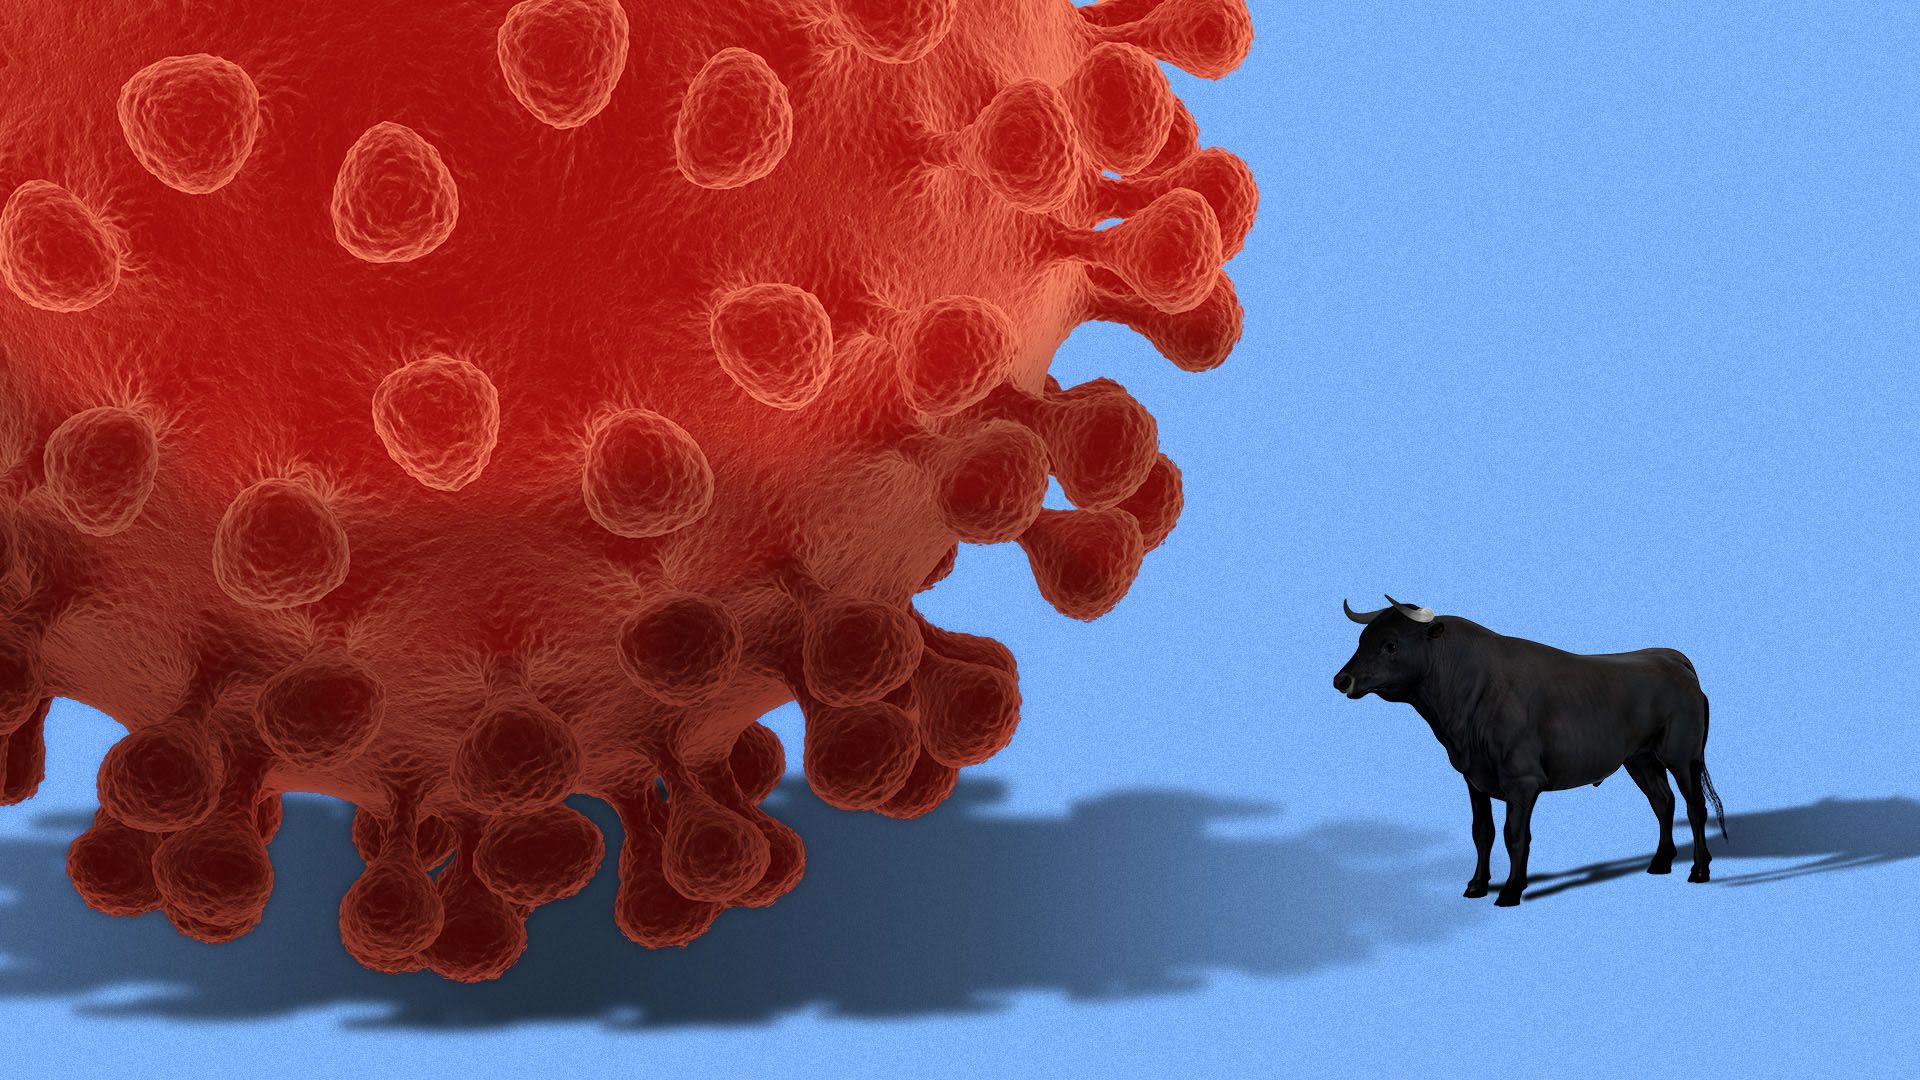 Coronavirus illustration against a wall street bull